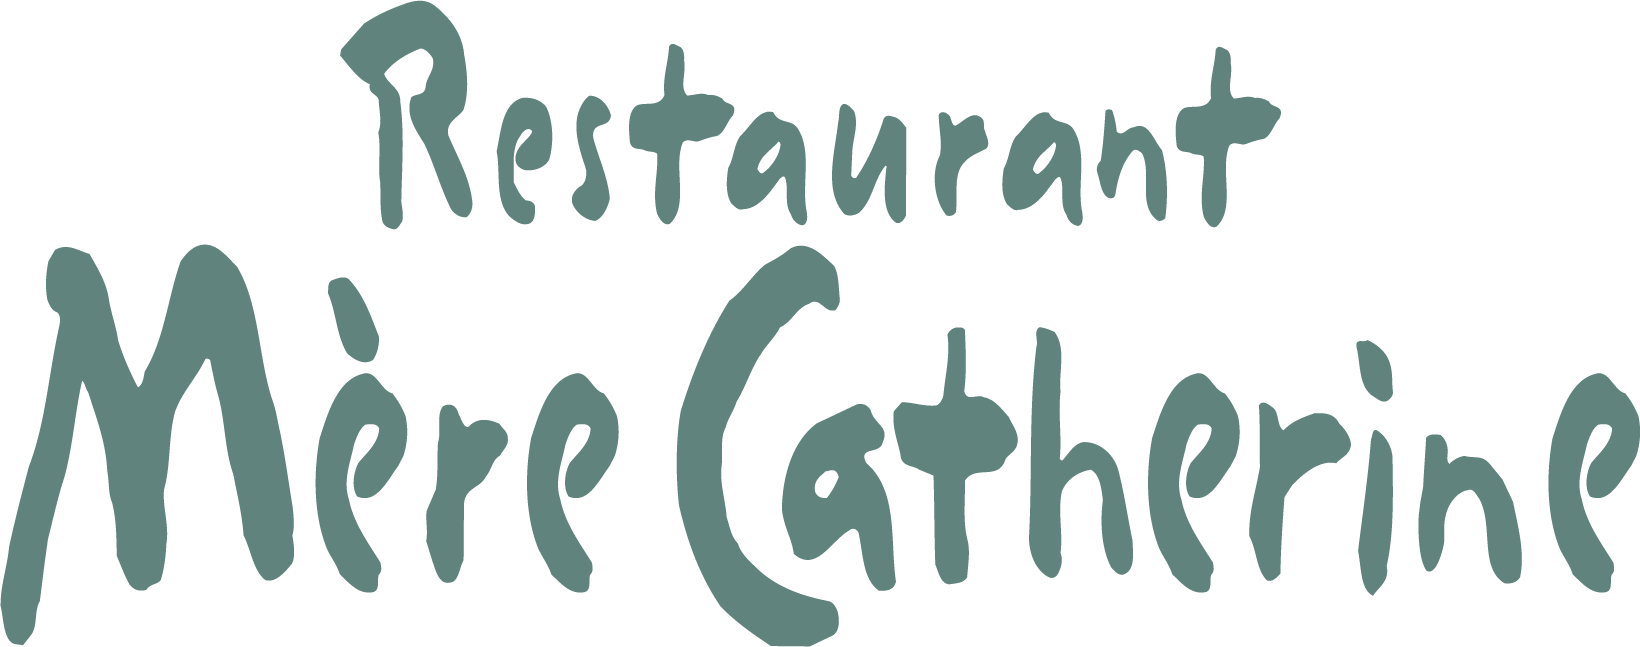 Logo Mère Catherine